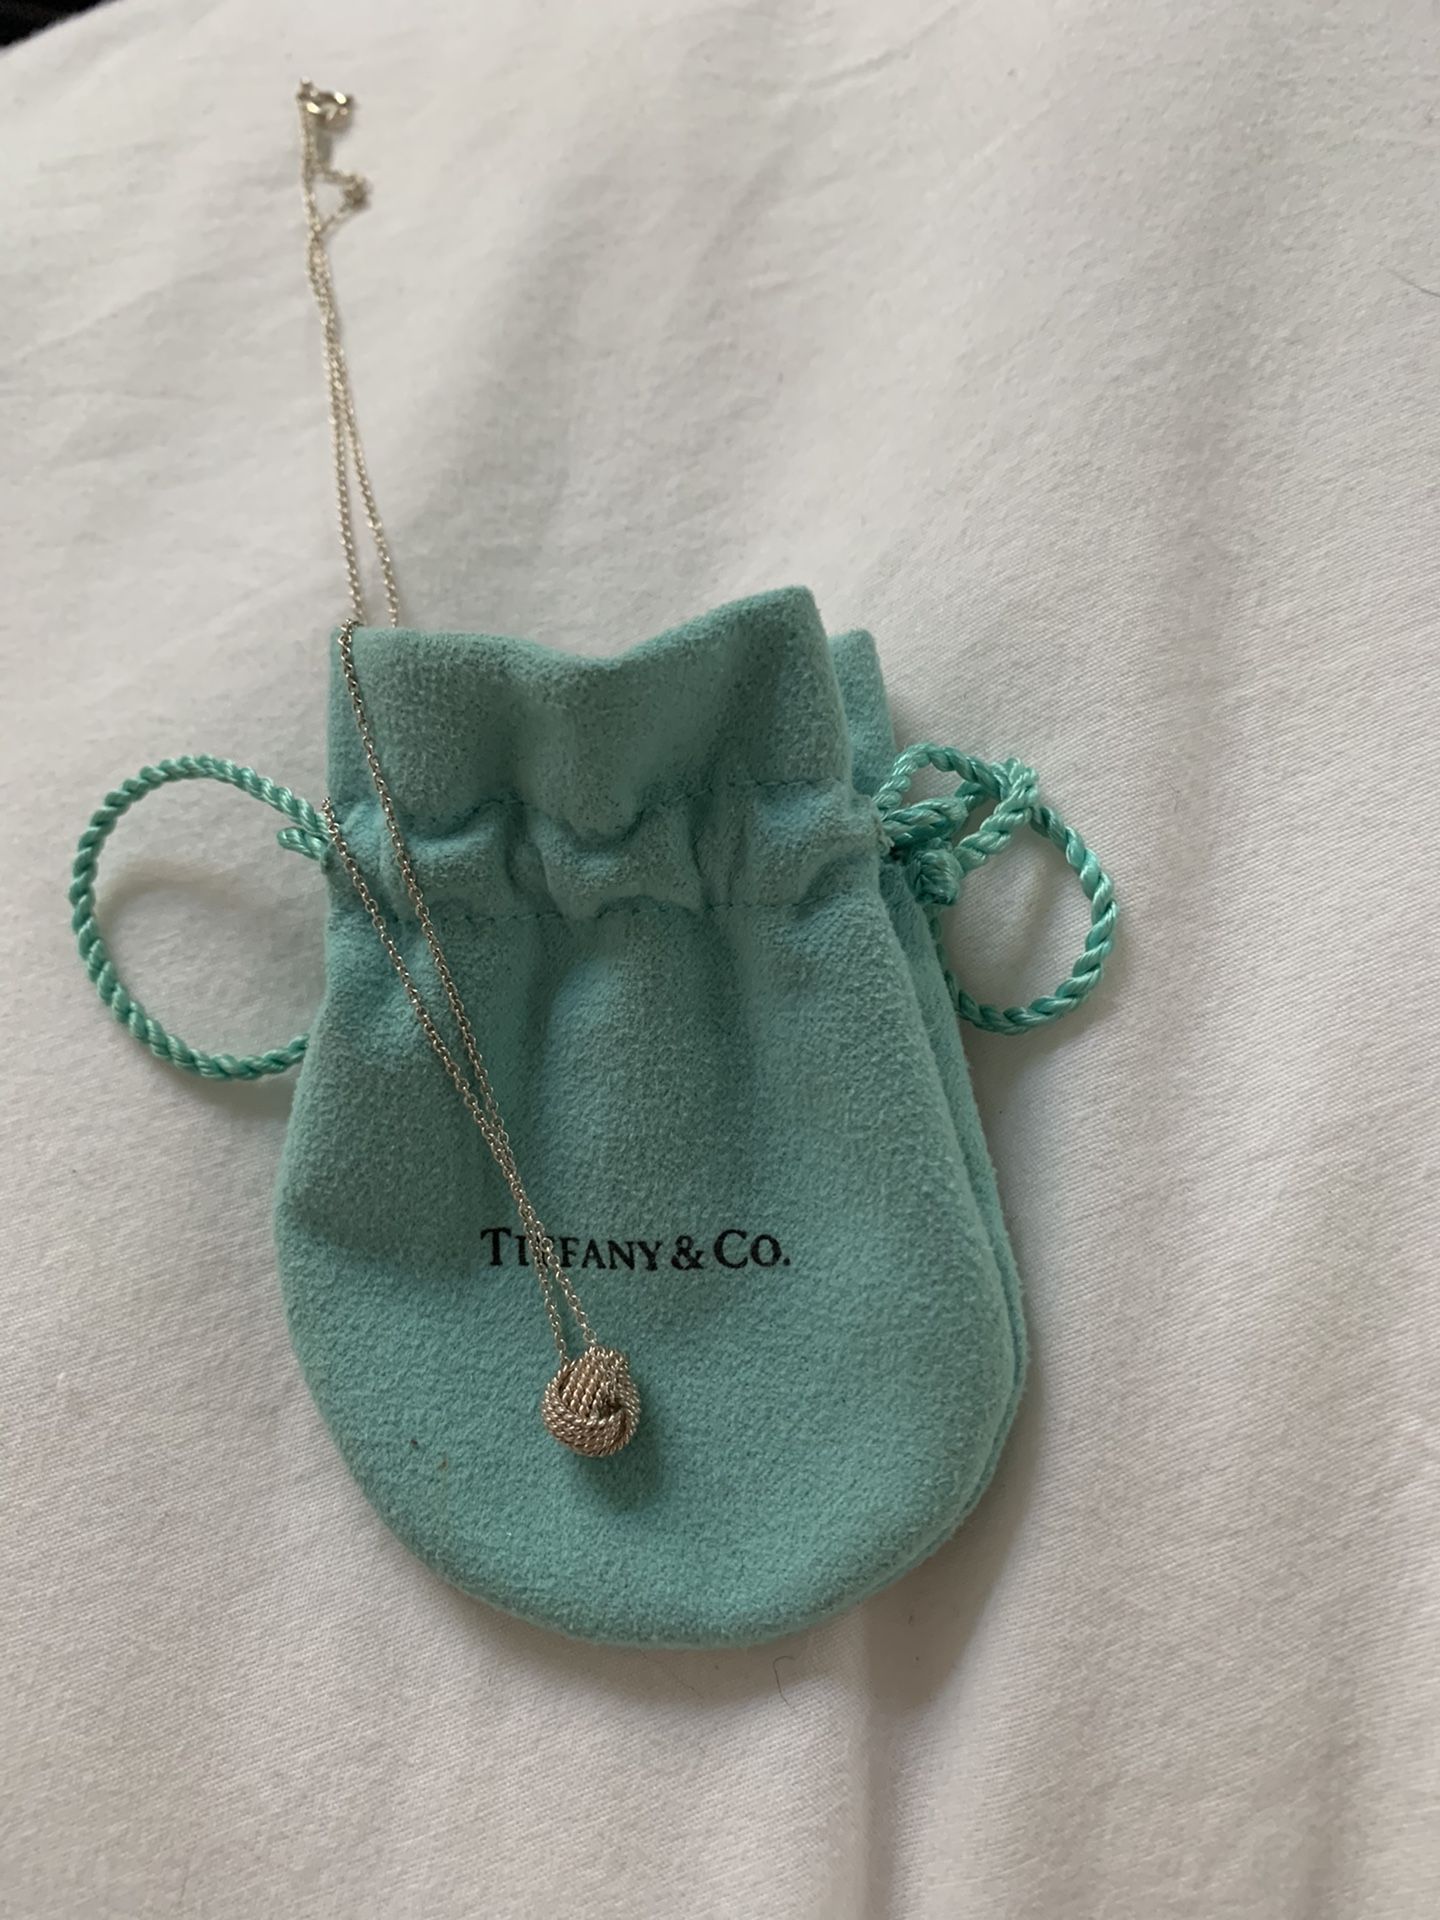 Worn Twice Tiffany’s Knot Pendant